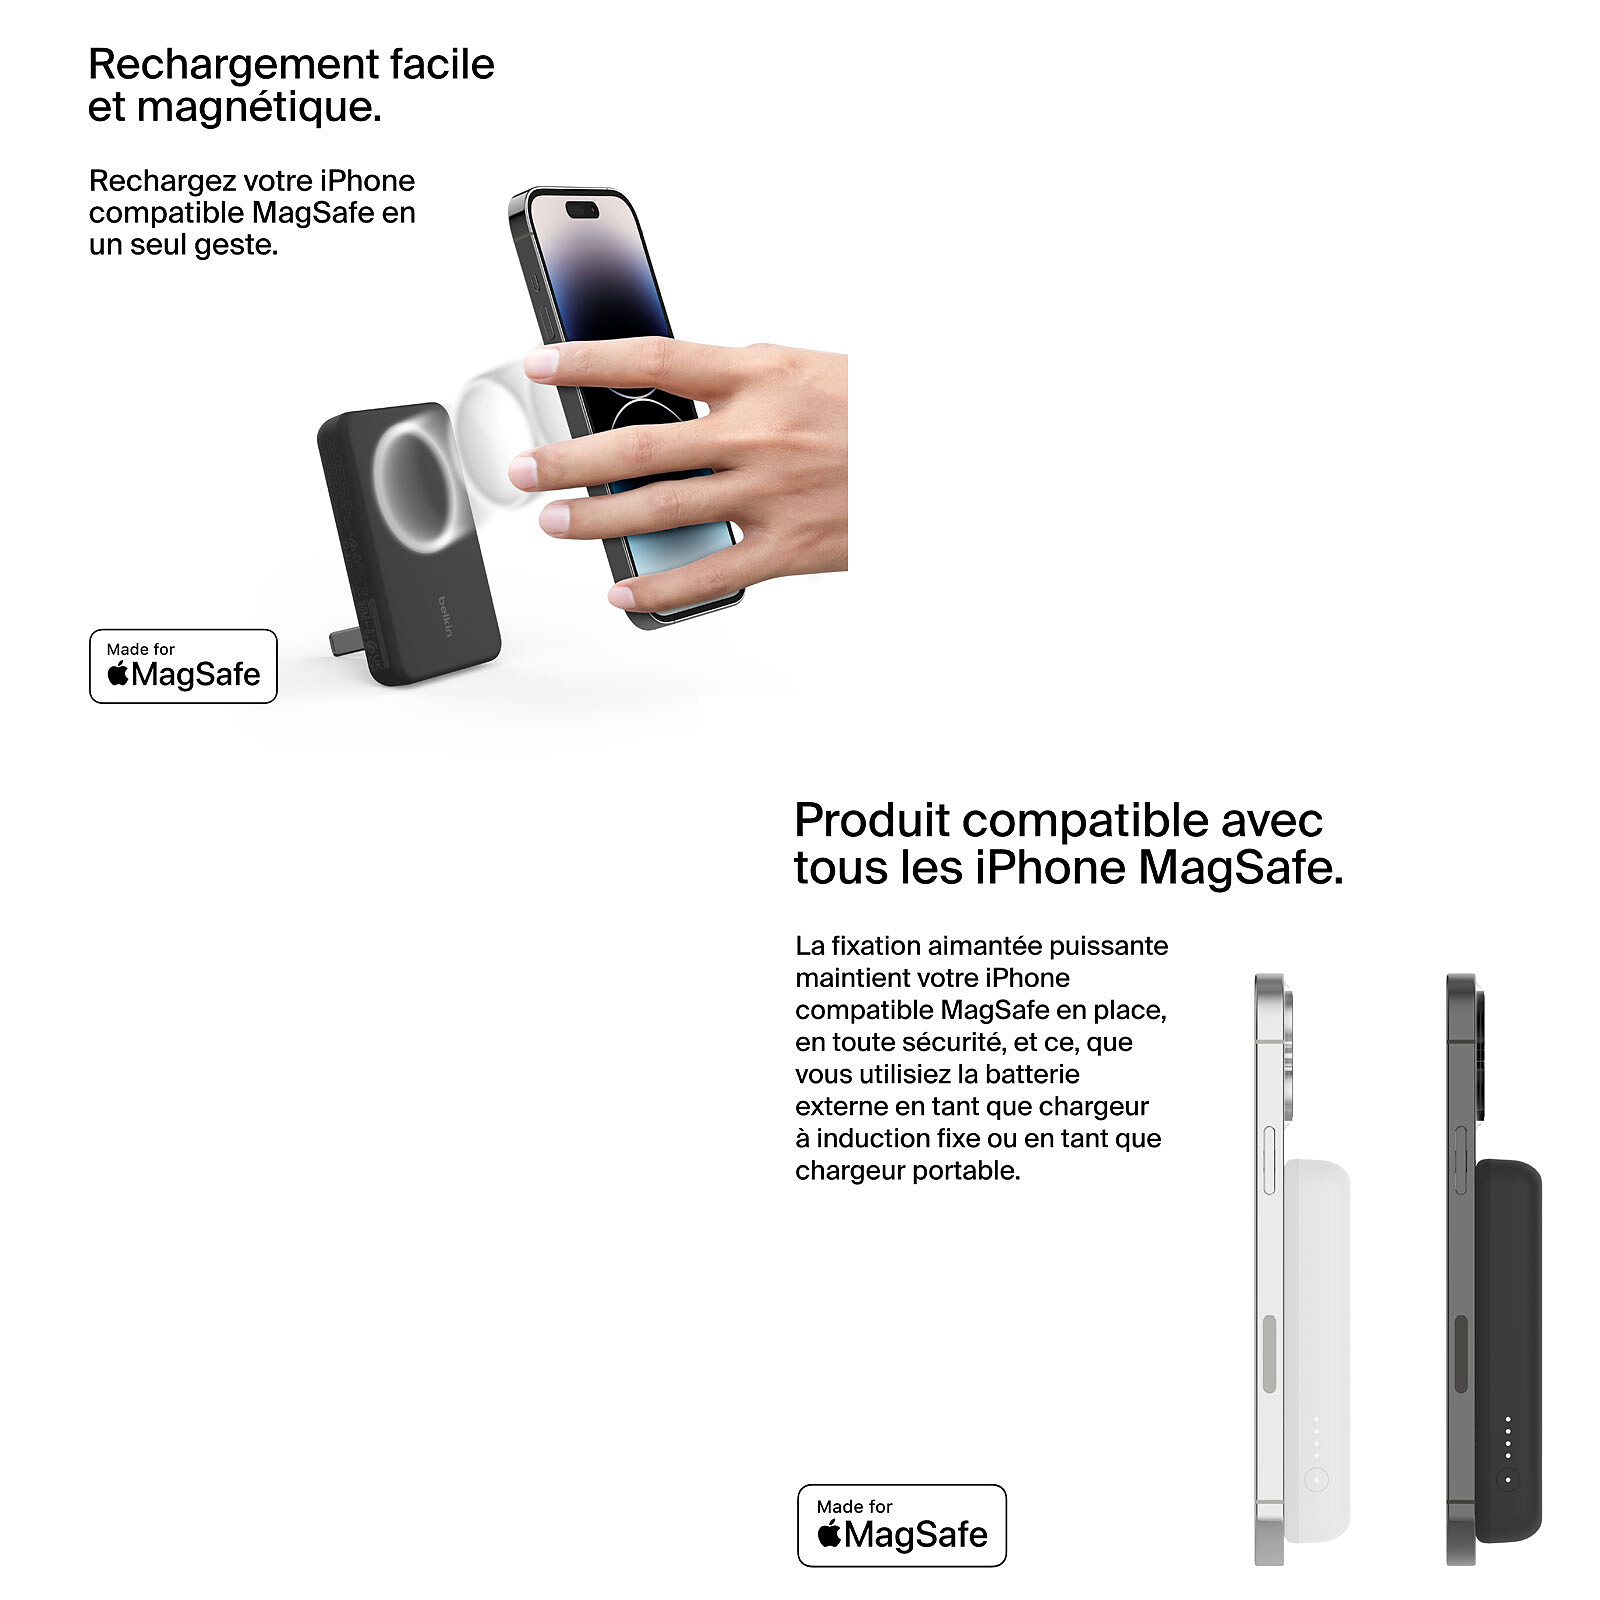 Belkin Batterie Externe 5 K avec Stand pour smartphone (Blanc